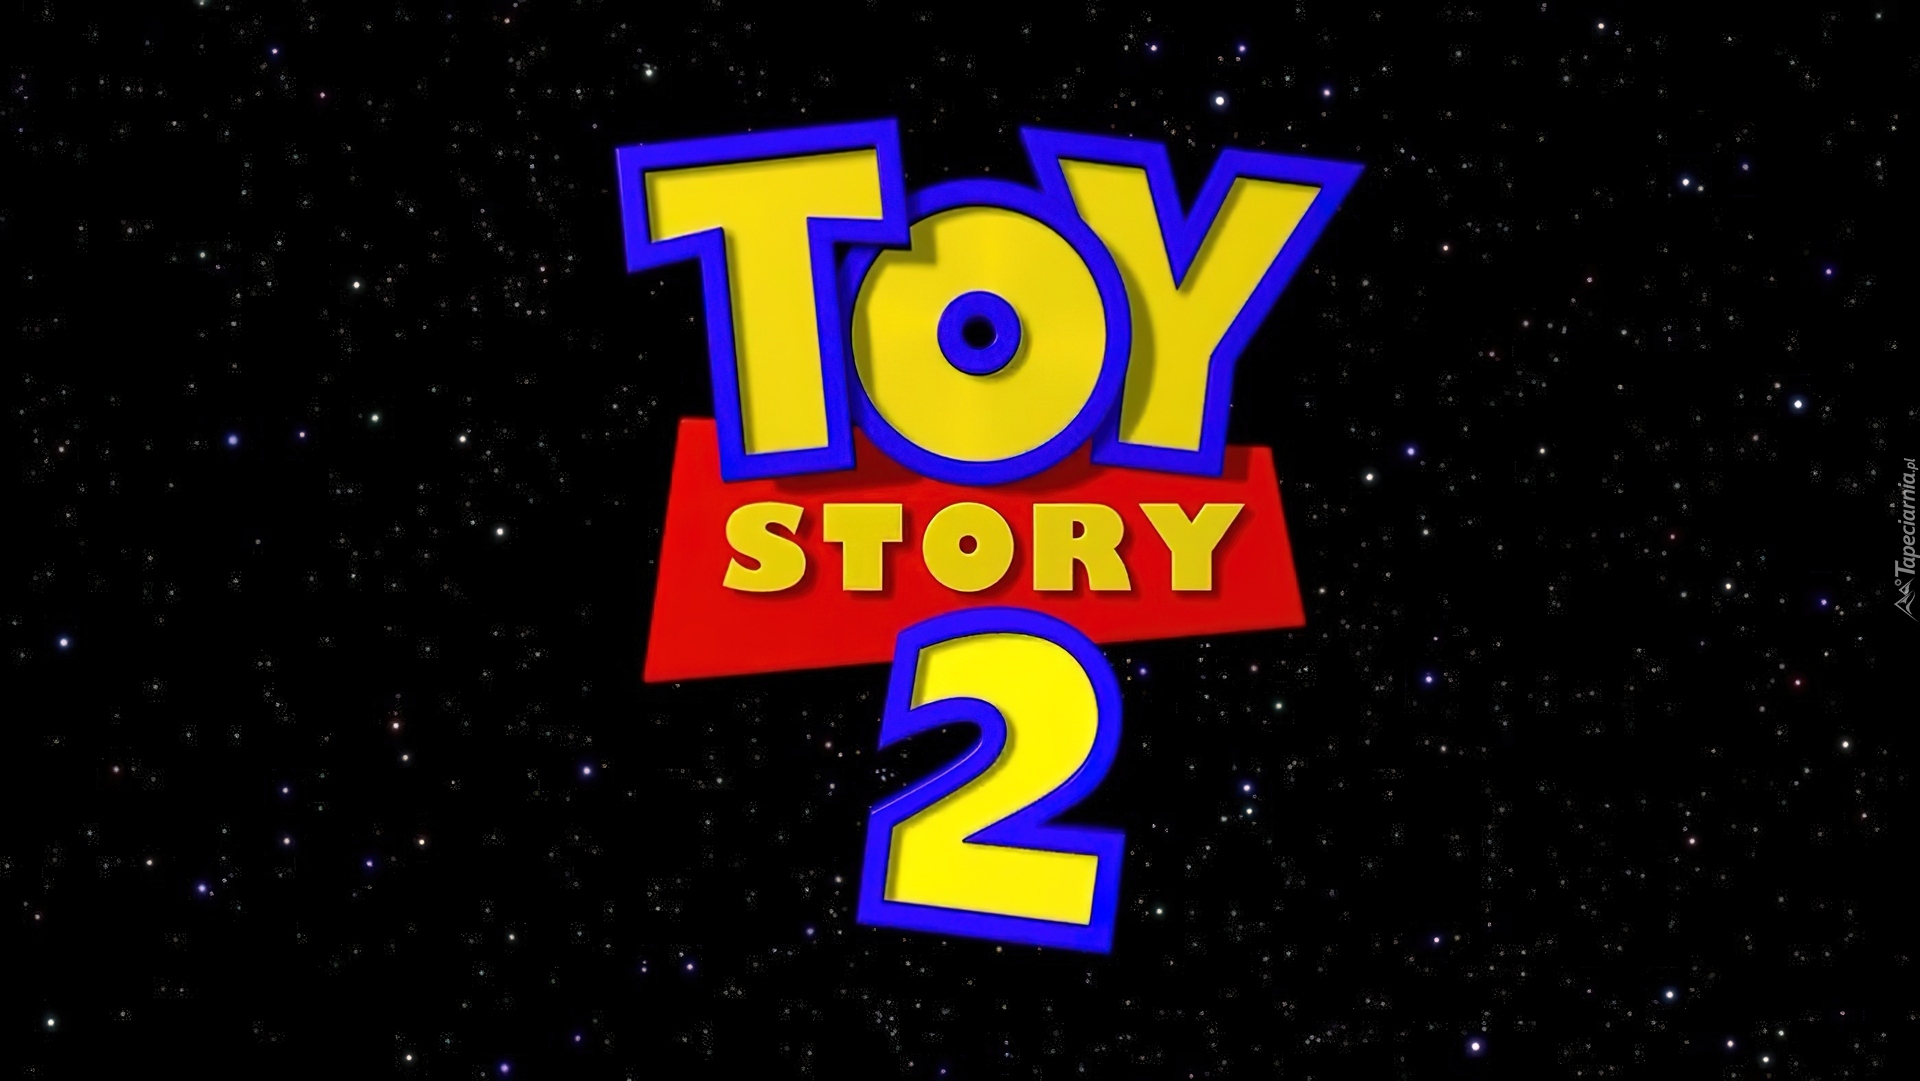 Napis, Toy Story 2